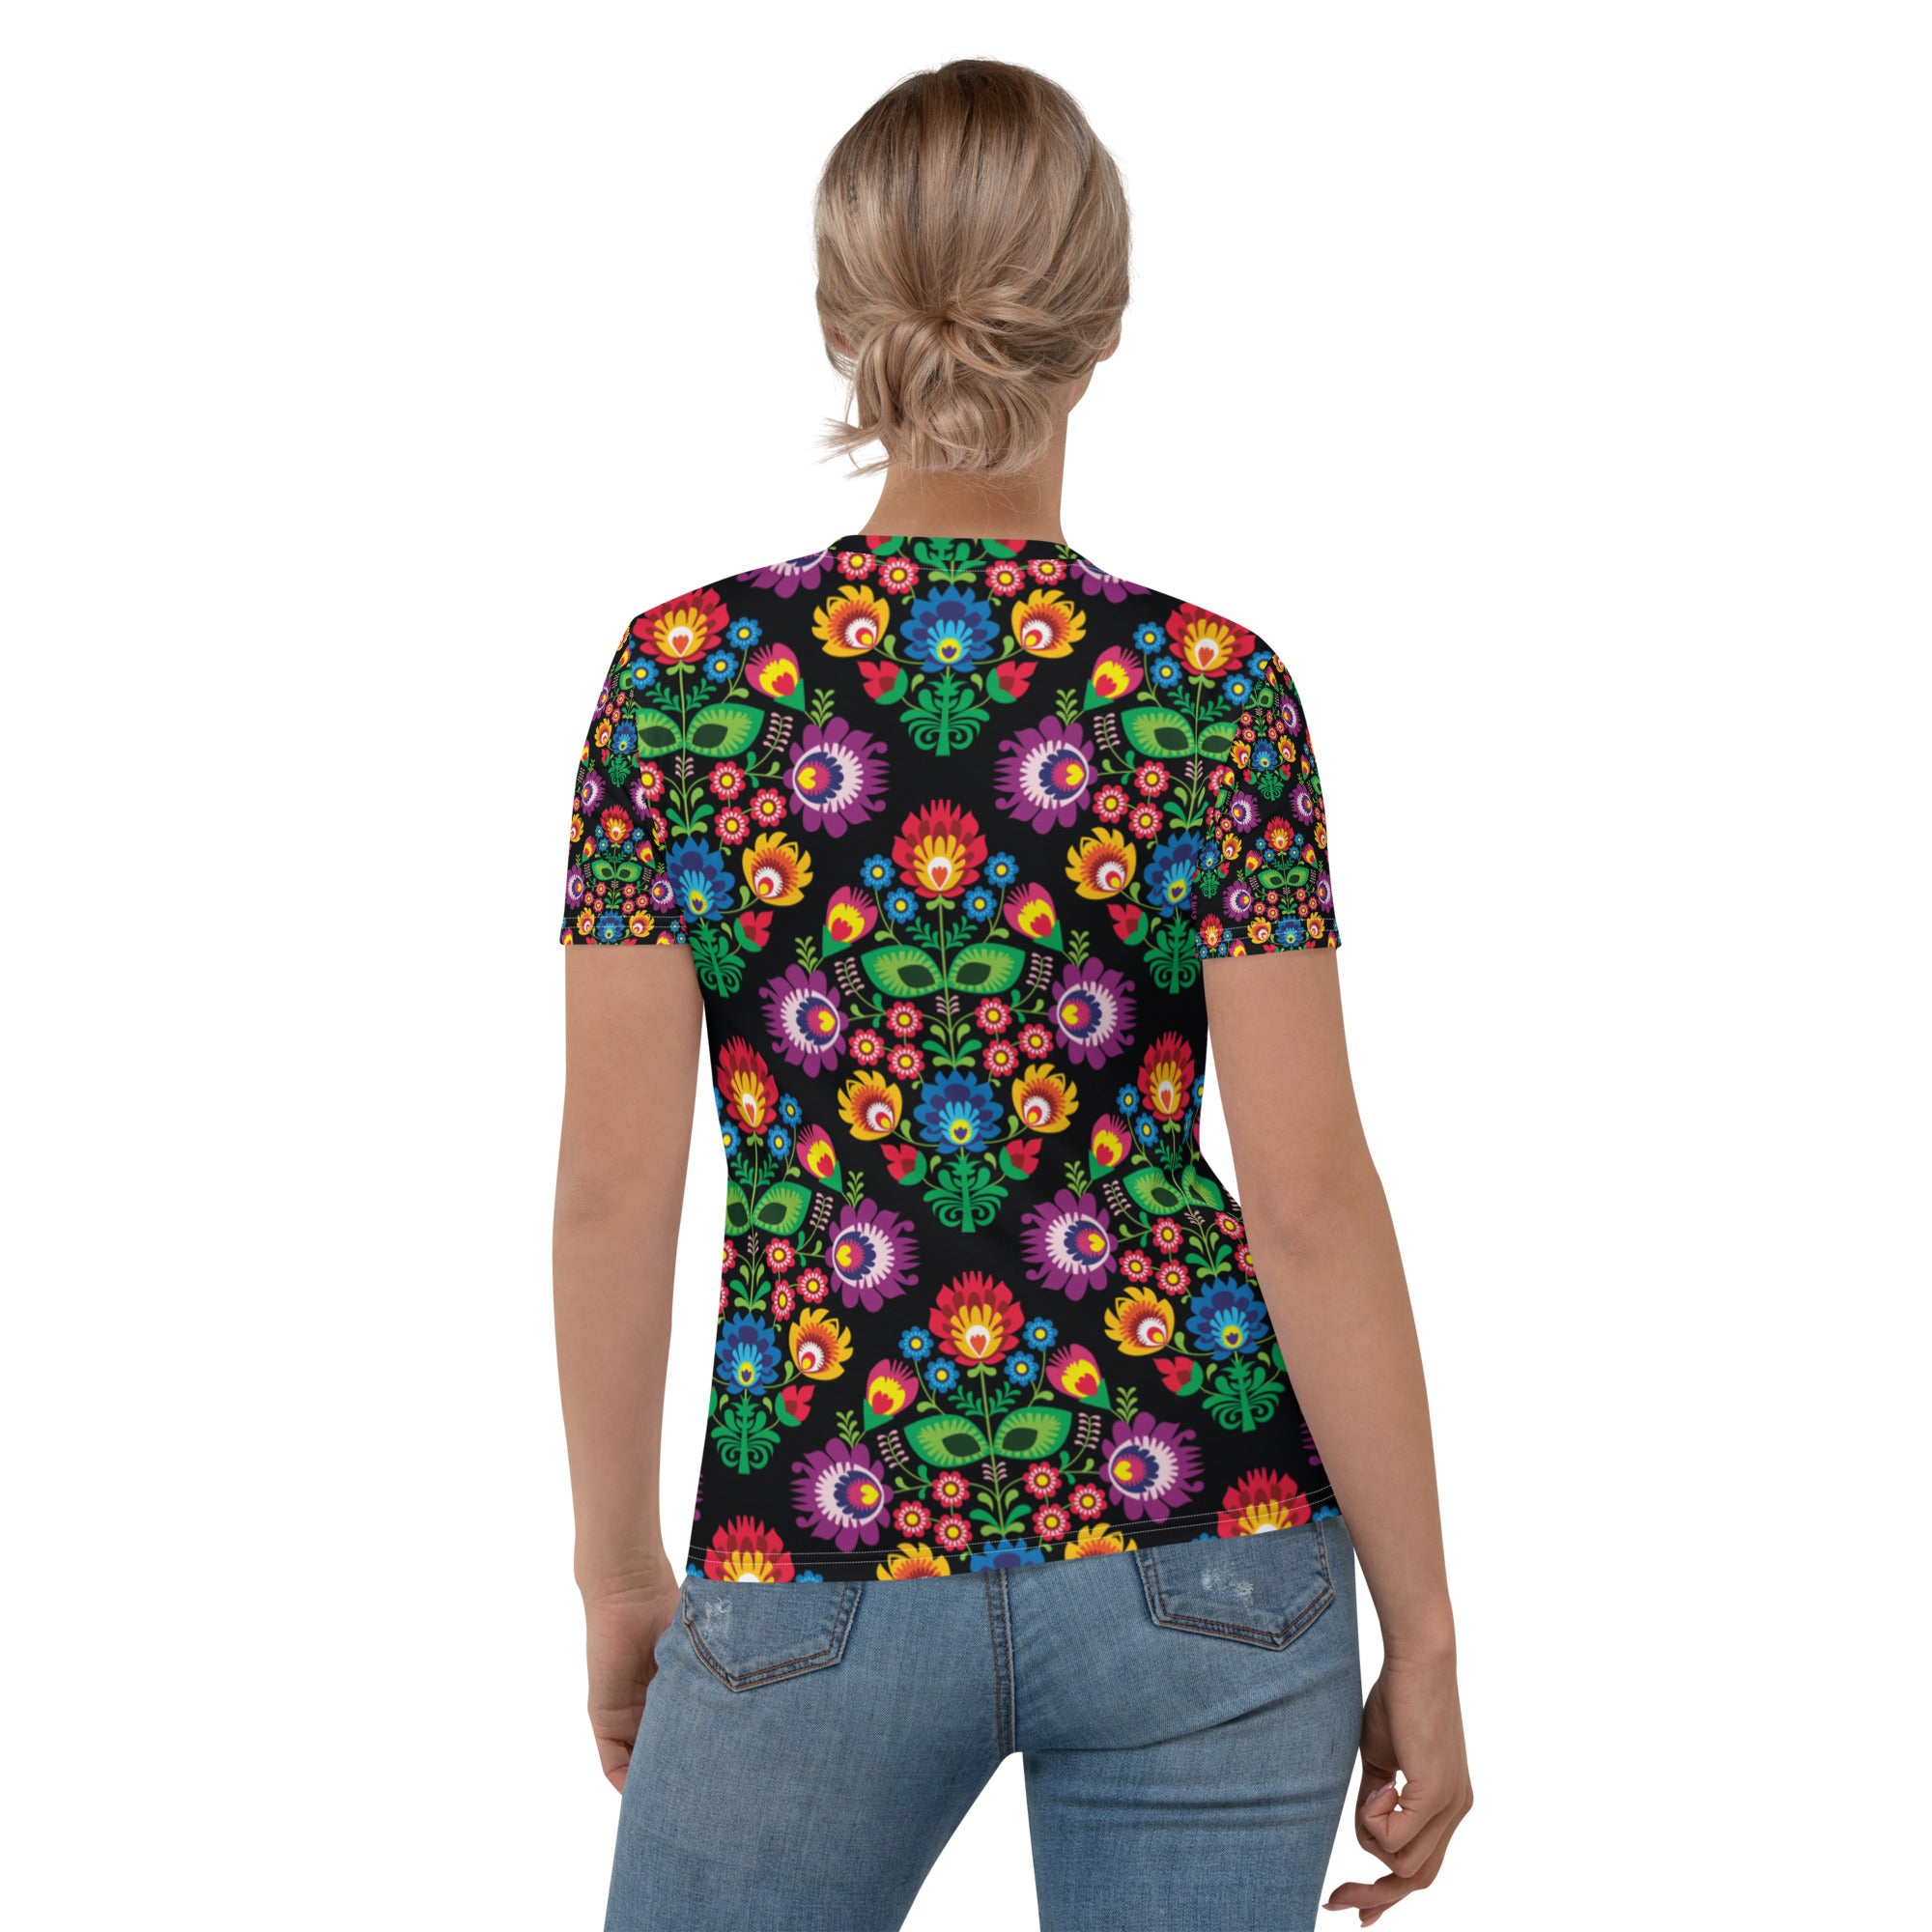 Dark Floral Wycinanki All Over Print Women's T-shirt  Polish Shirt Store   